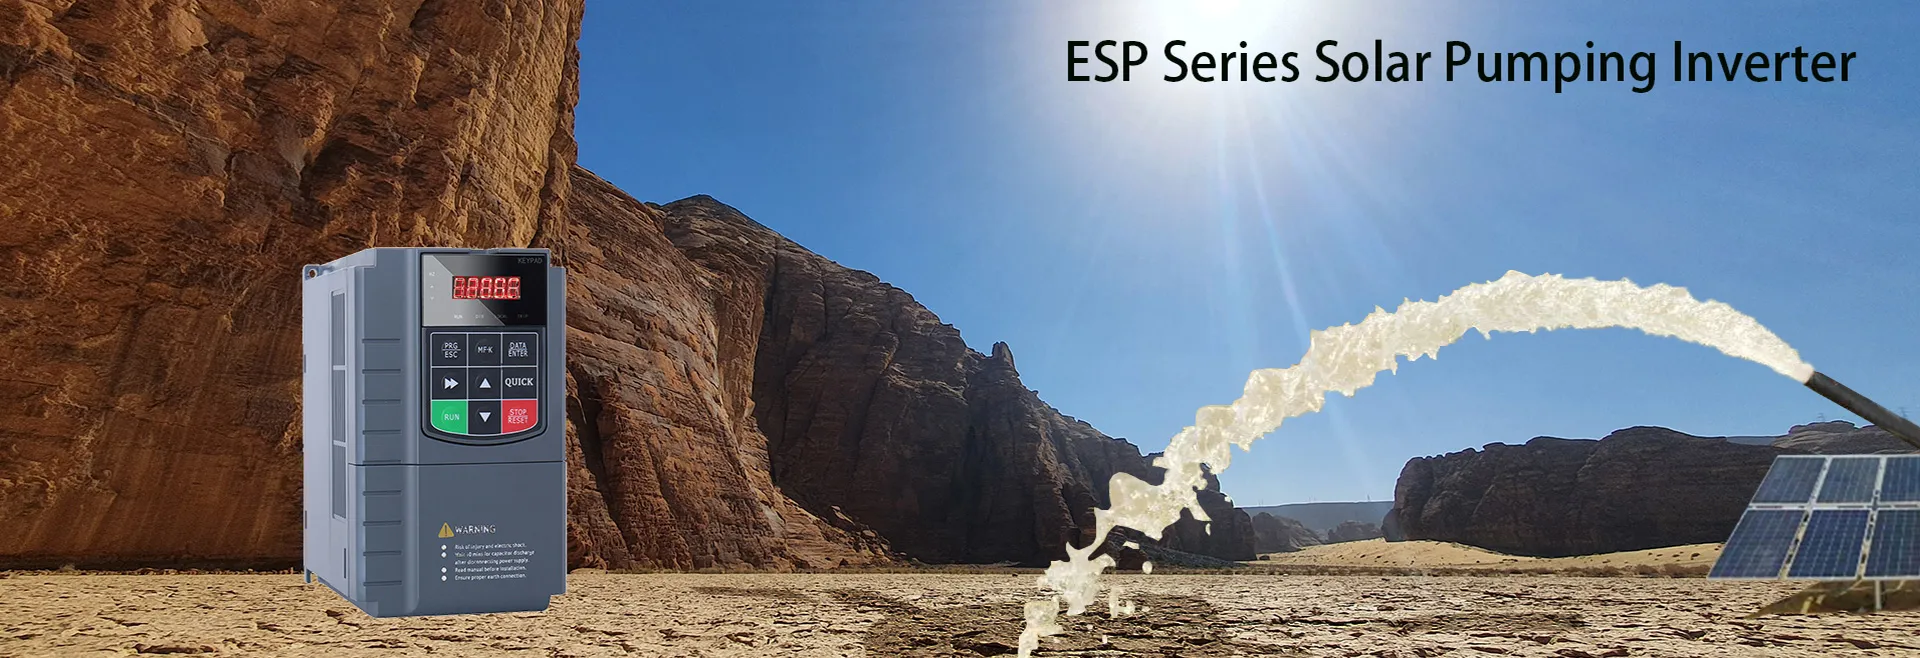 ESP Series Solar Pumping Inverter